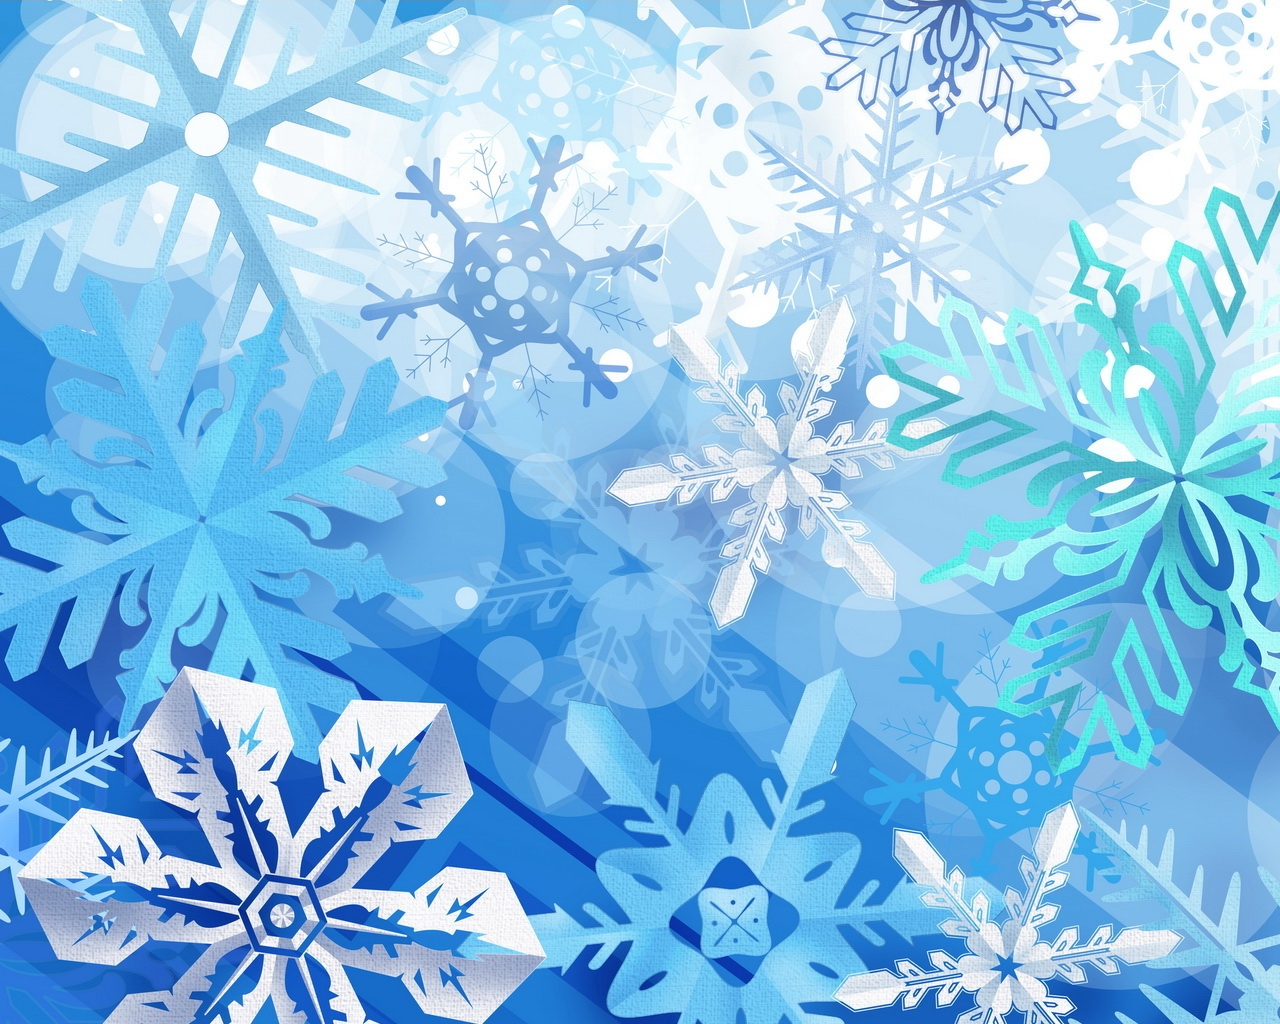 Snowflake Desktop Wallpaper - Bing images